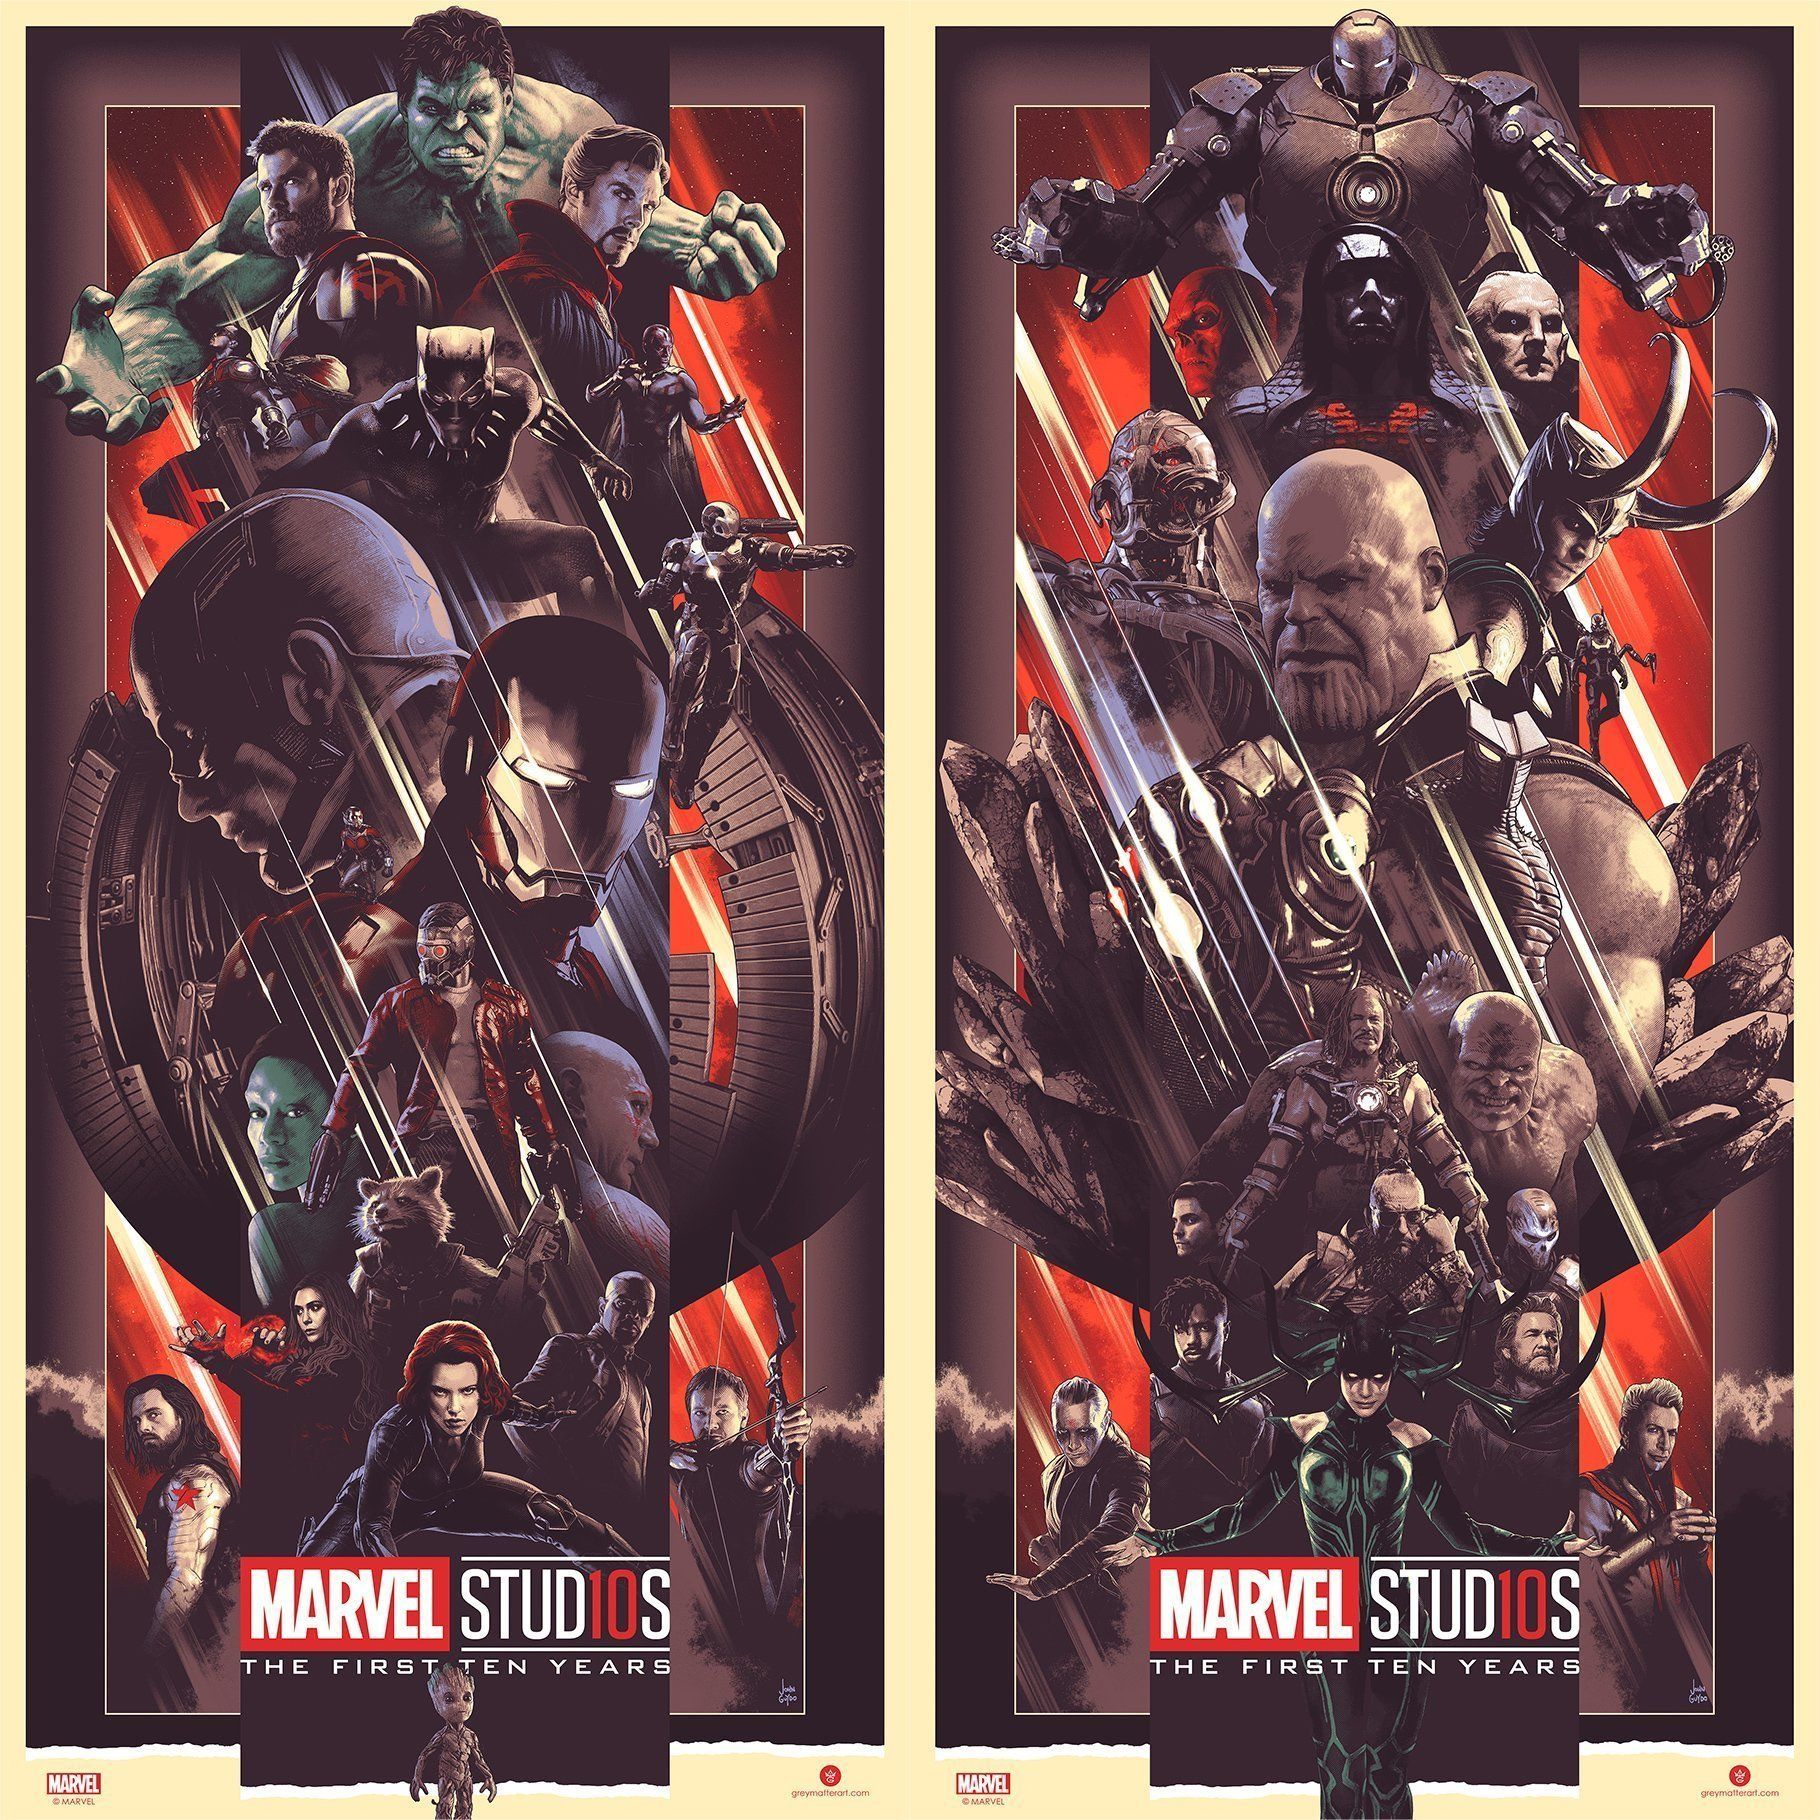 Marvel Studios 'First Ten Years' posters